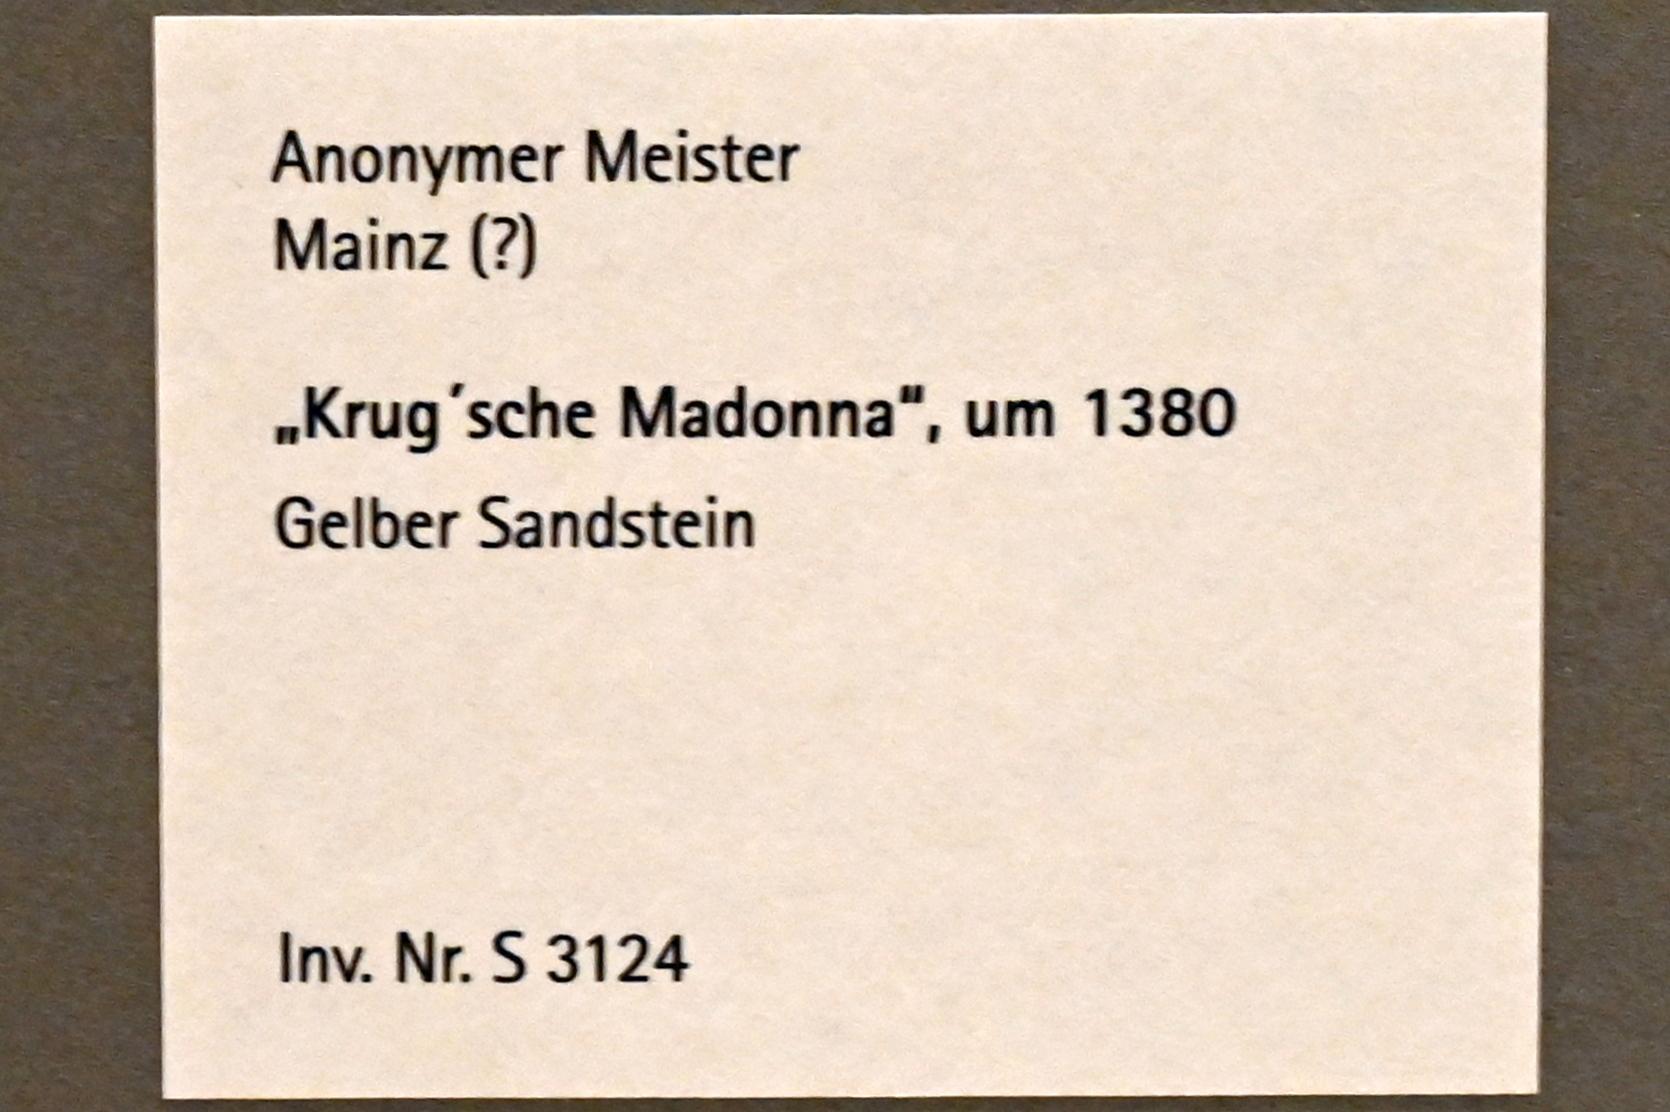 "Krug'sche Madonna", Mainz, Landesmuseum, Schaudepot, um 1380, Bild 4/4